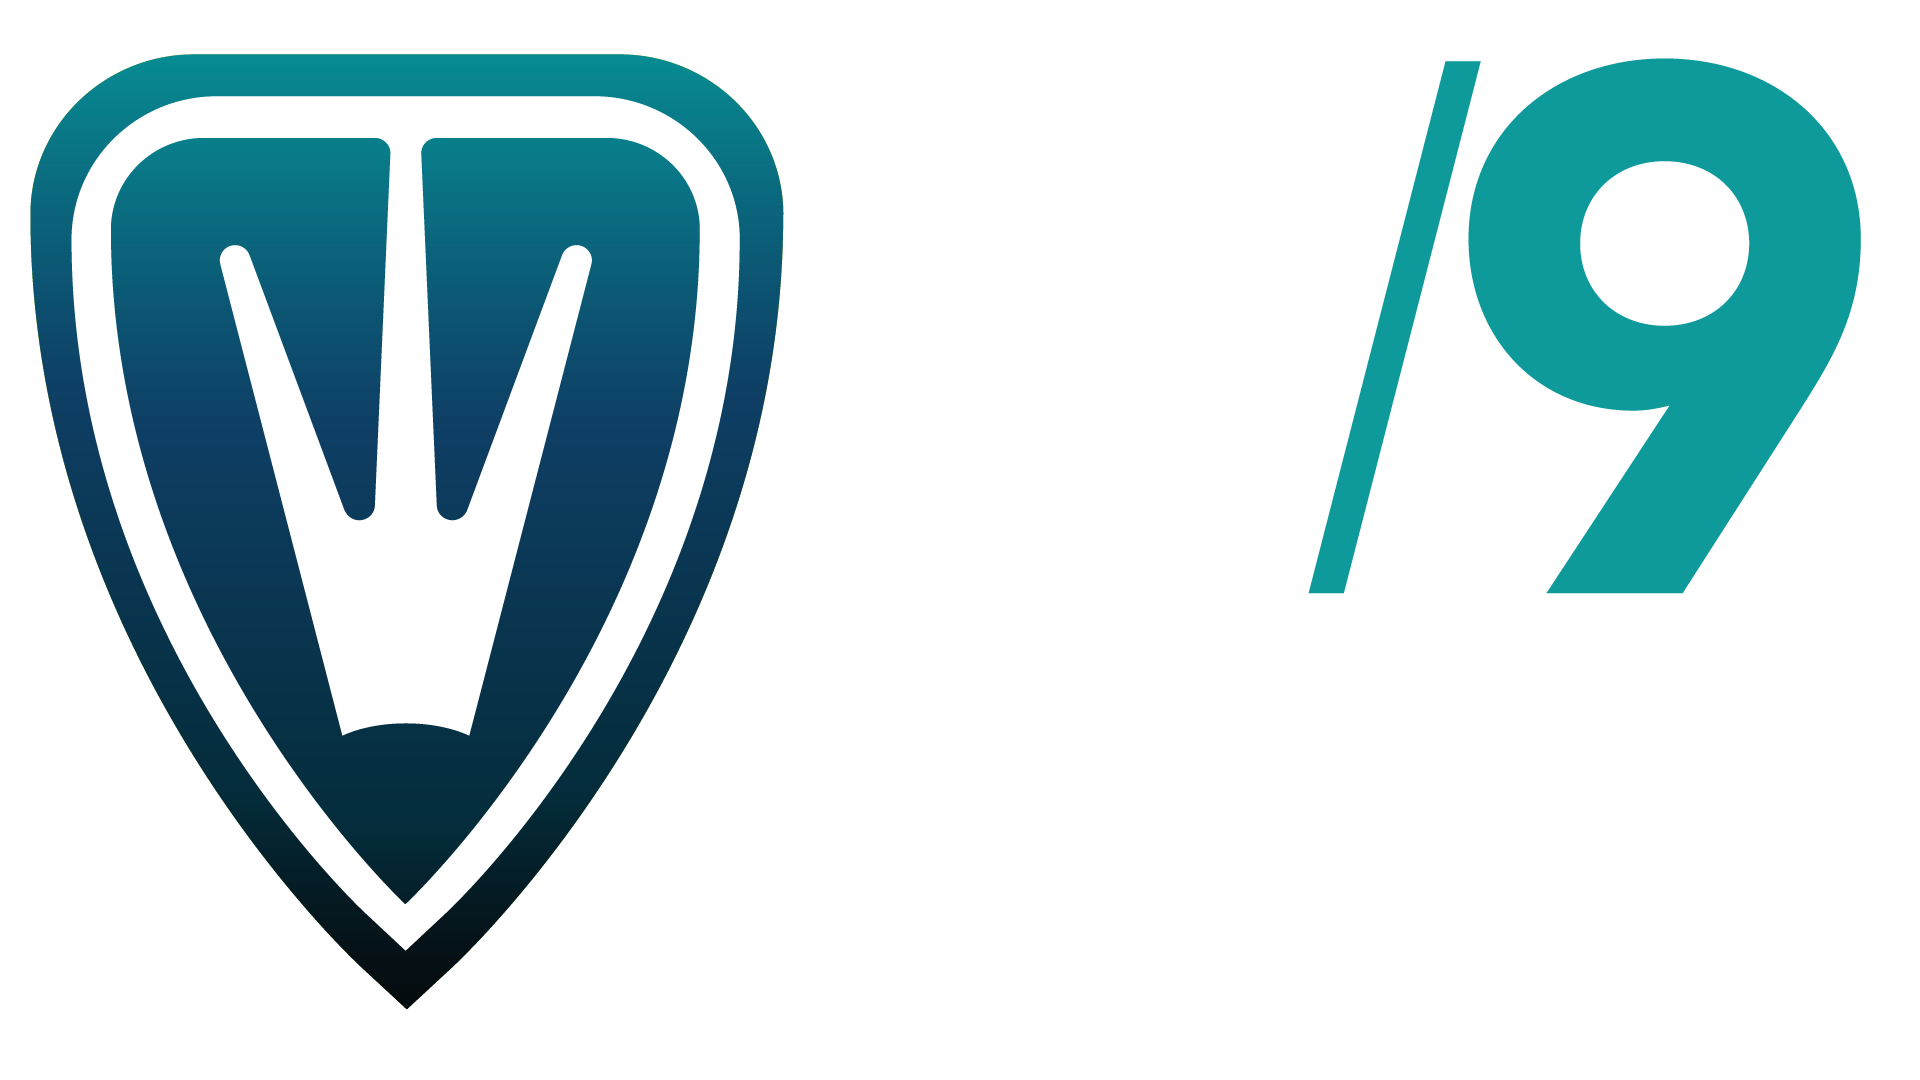 Digital 9 Infrastructure plc